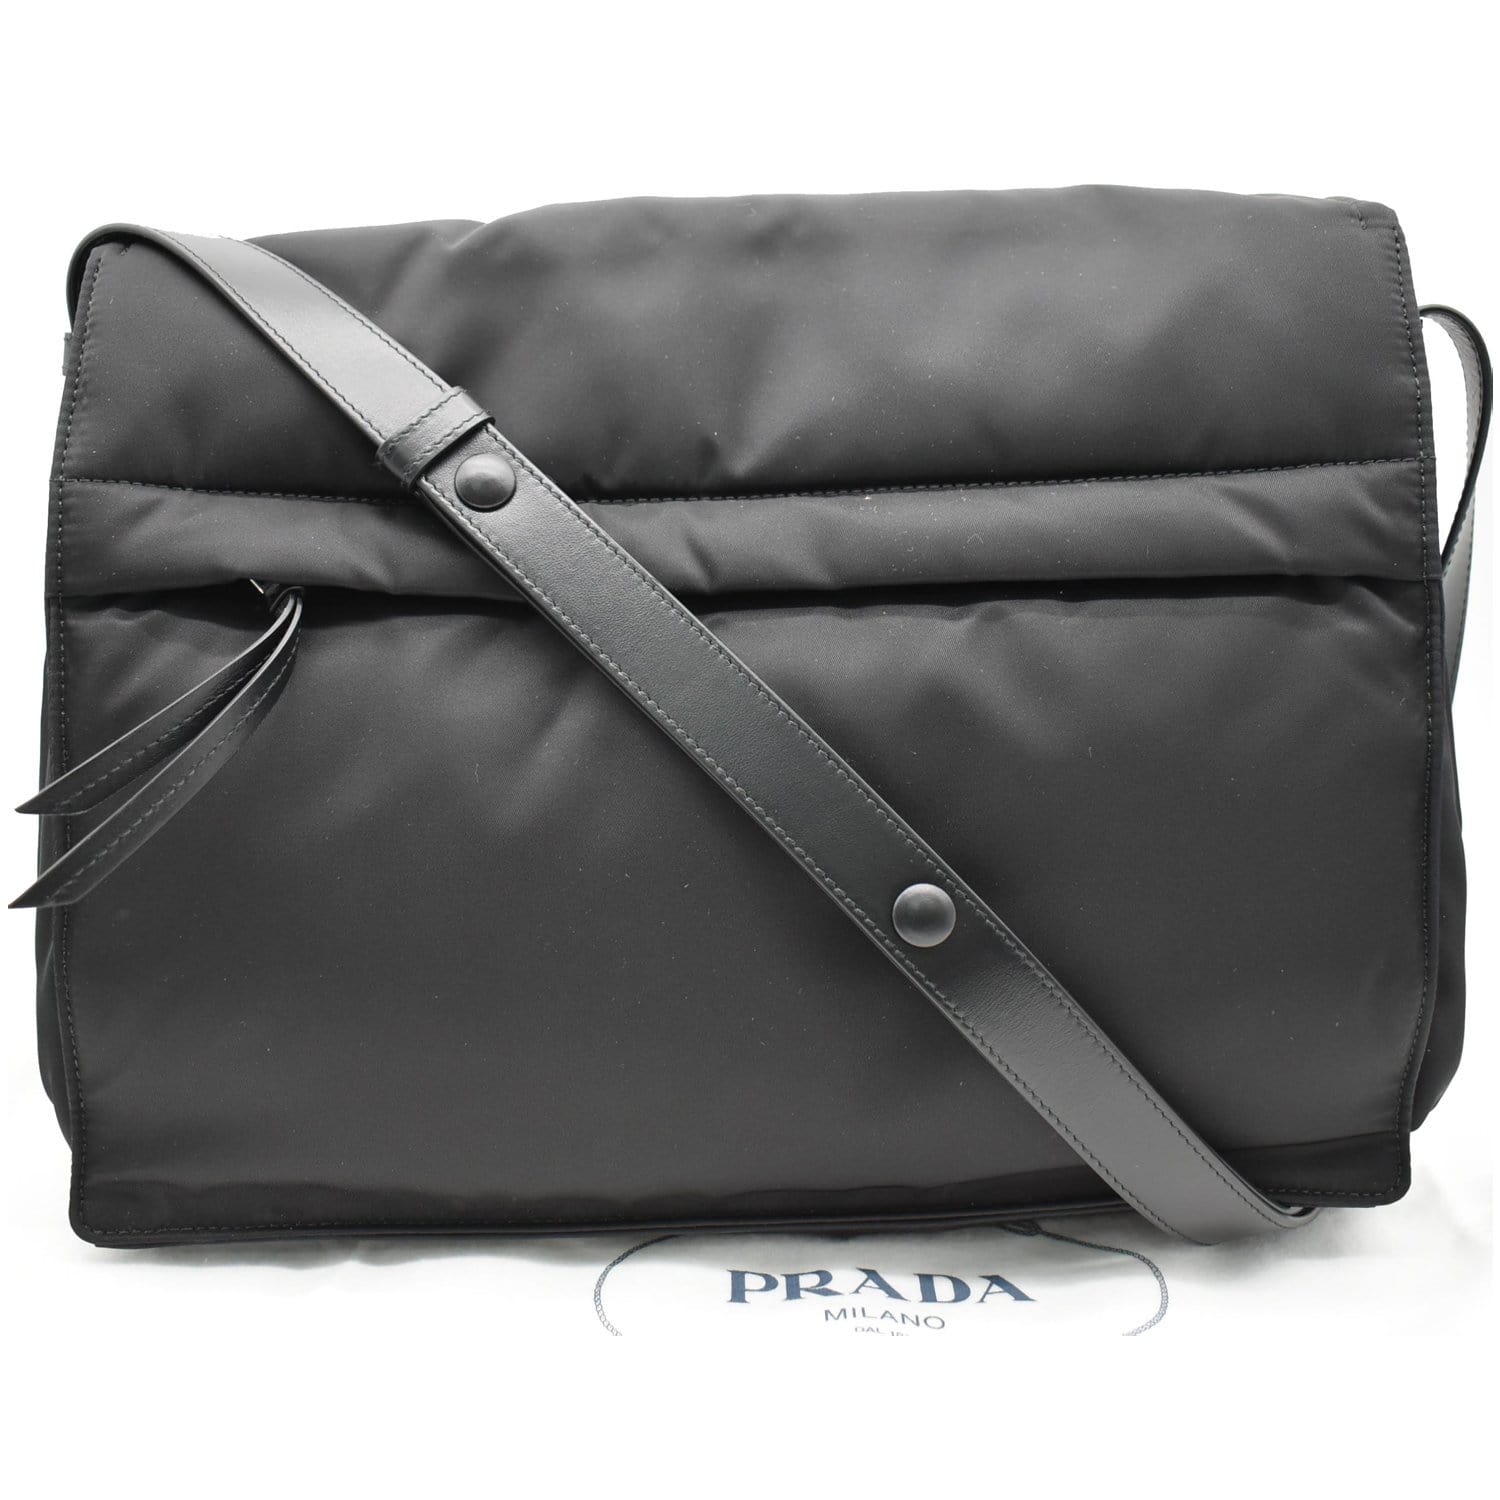 Prada Re-Nylon Shoulder Bag - Black - One Size